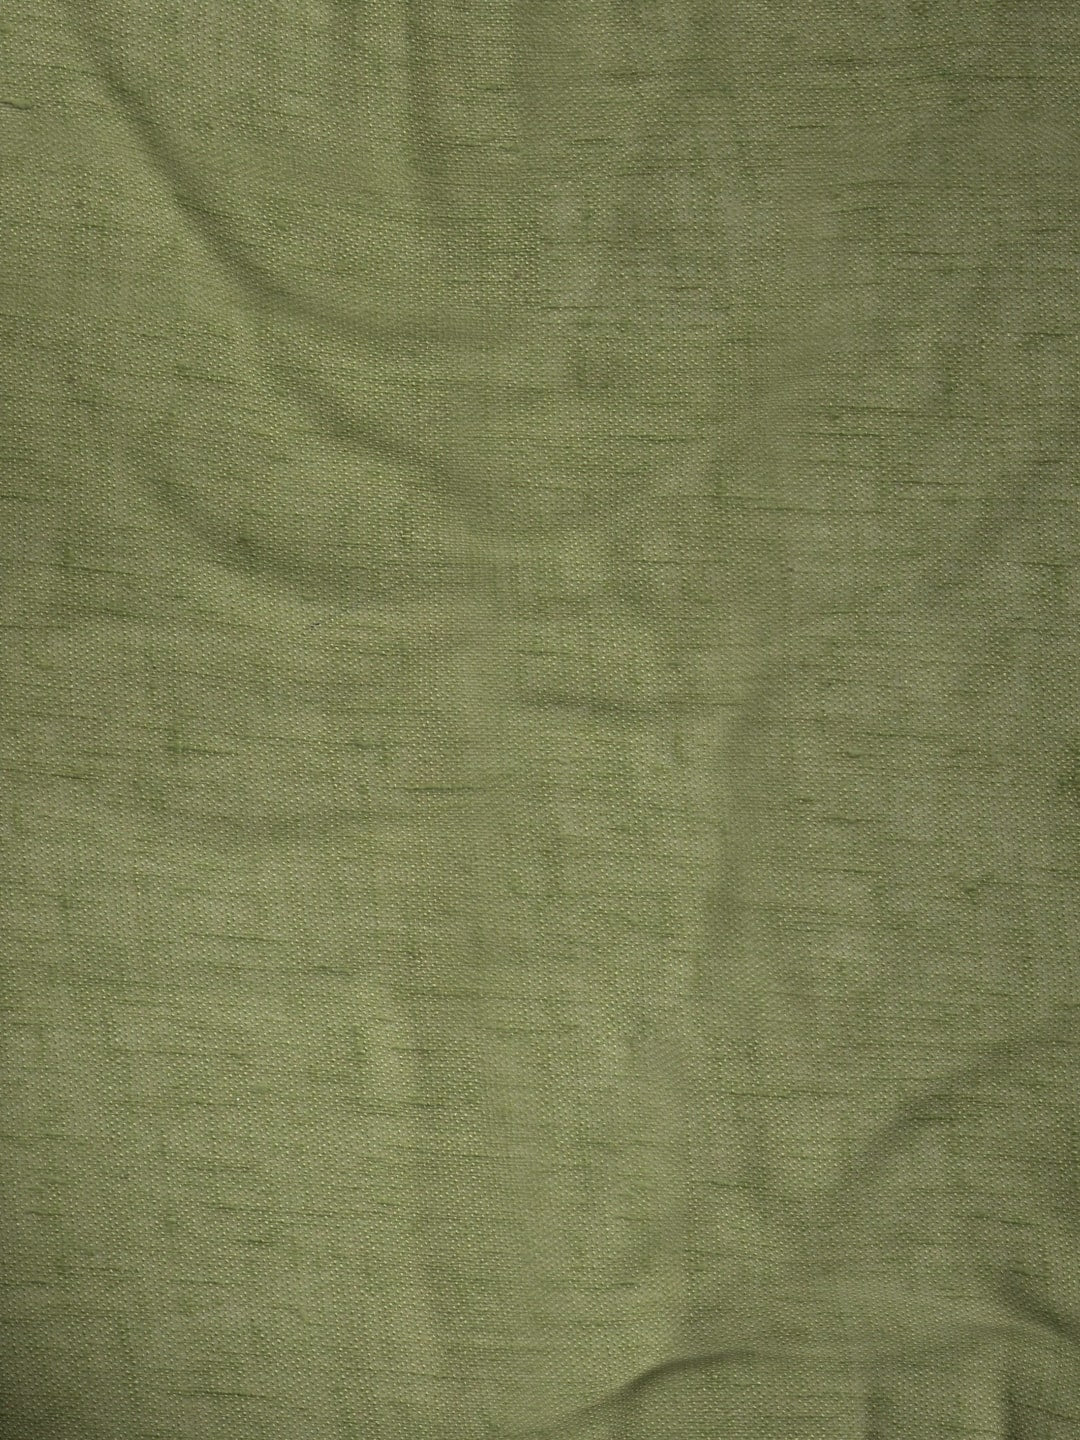 Olive Green::White / Window